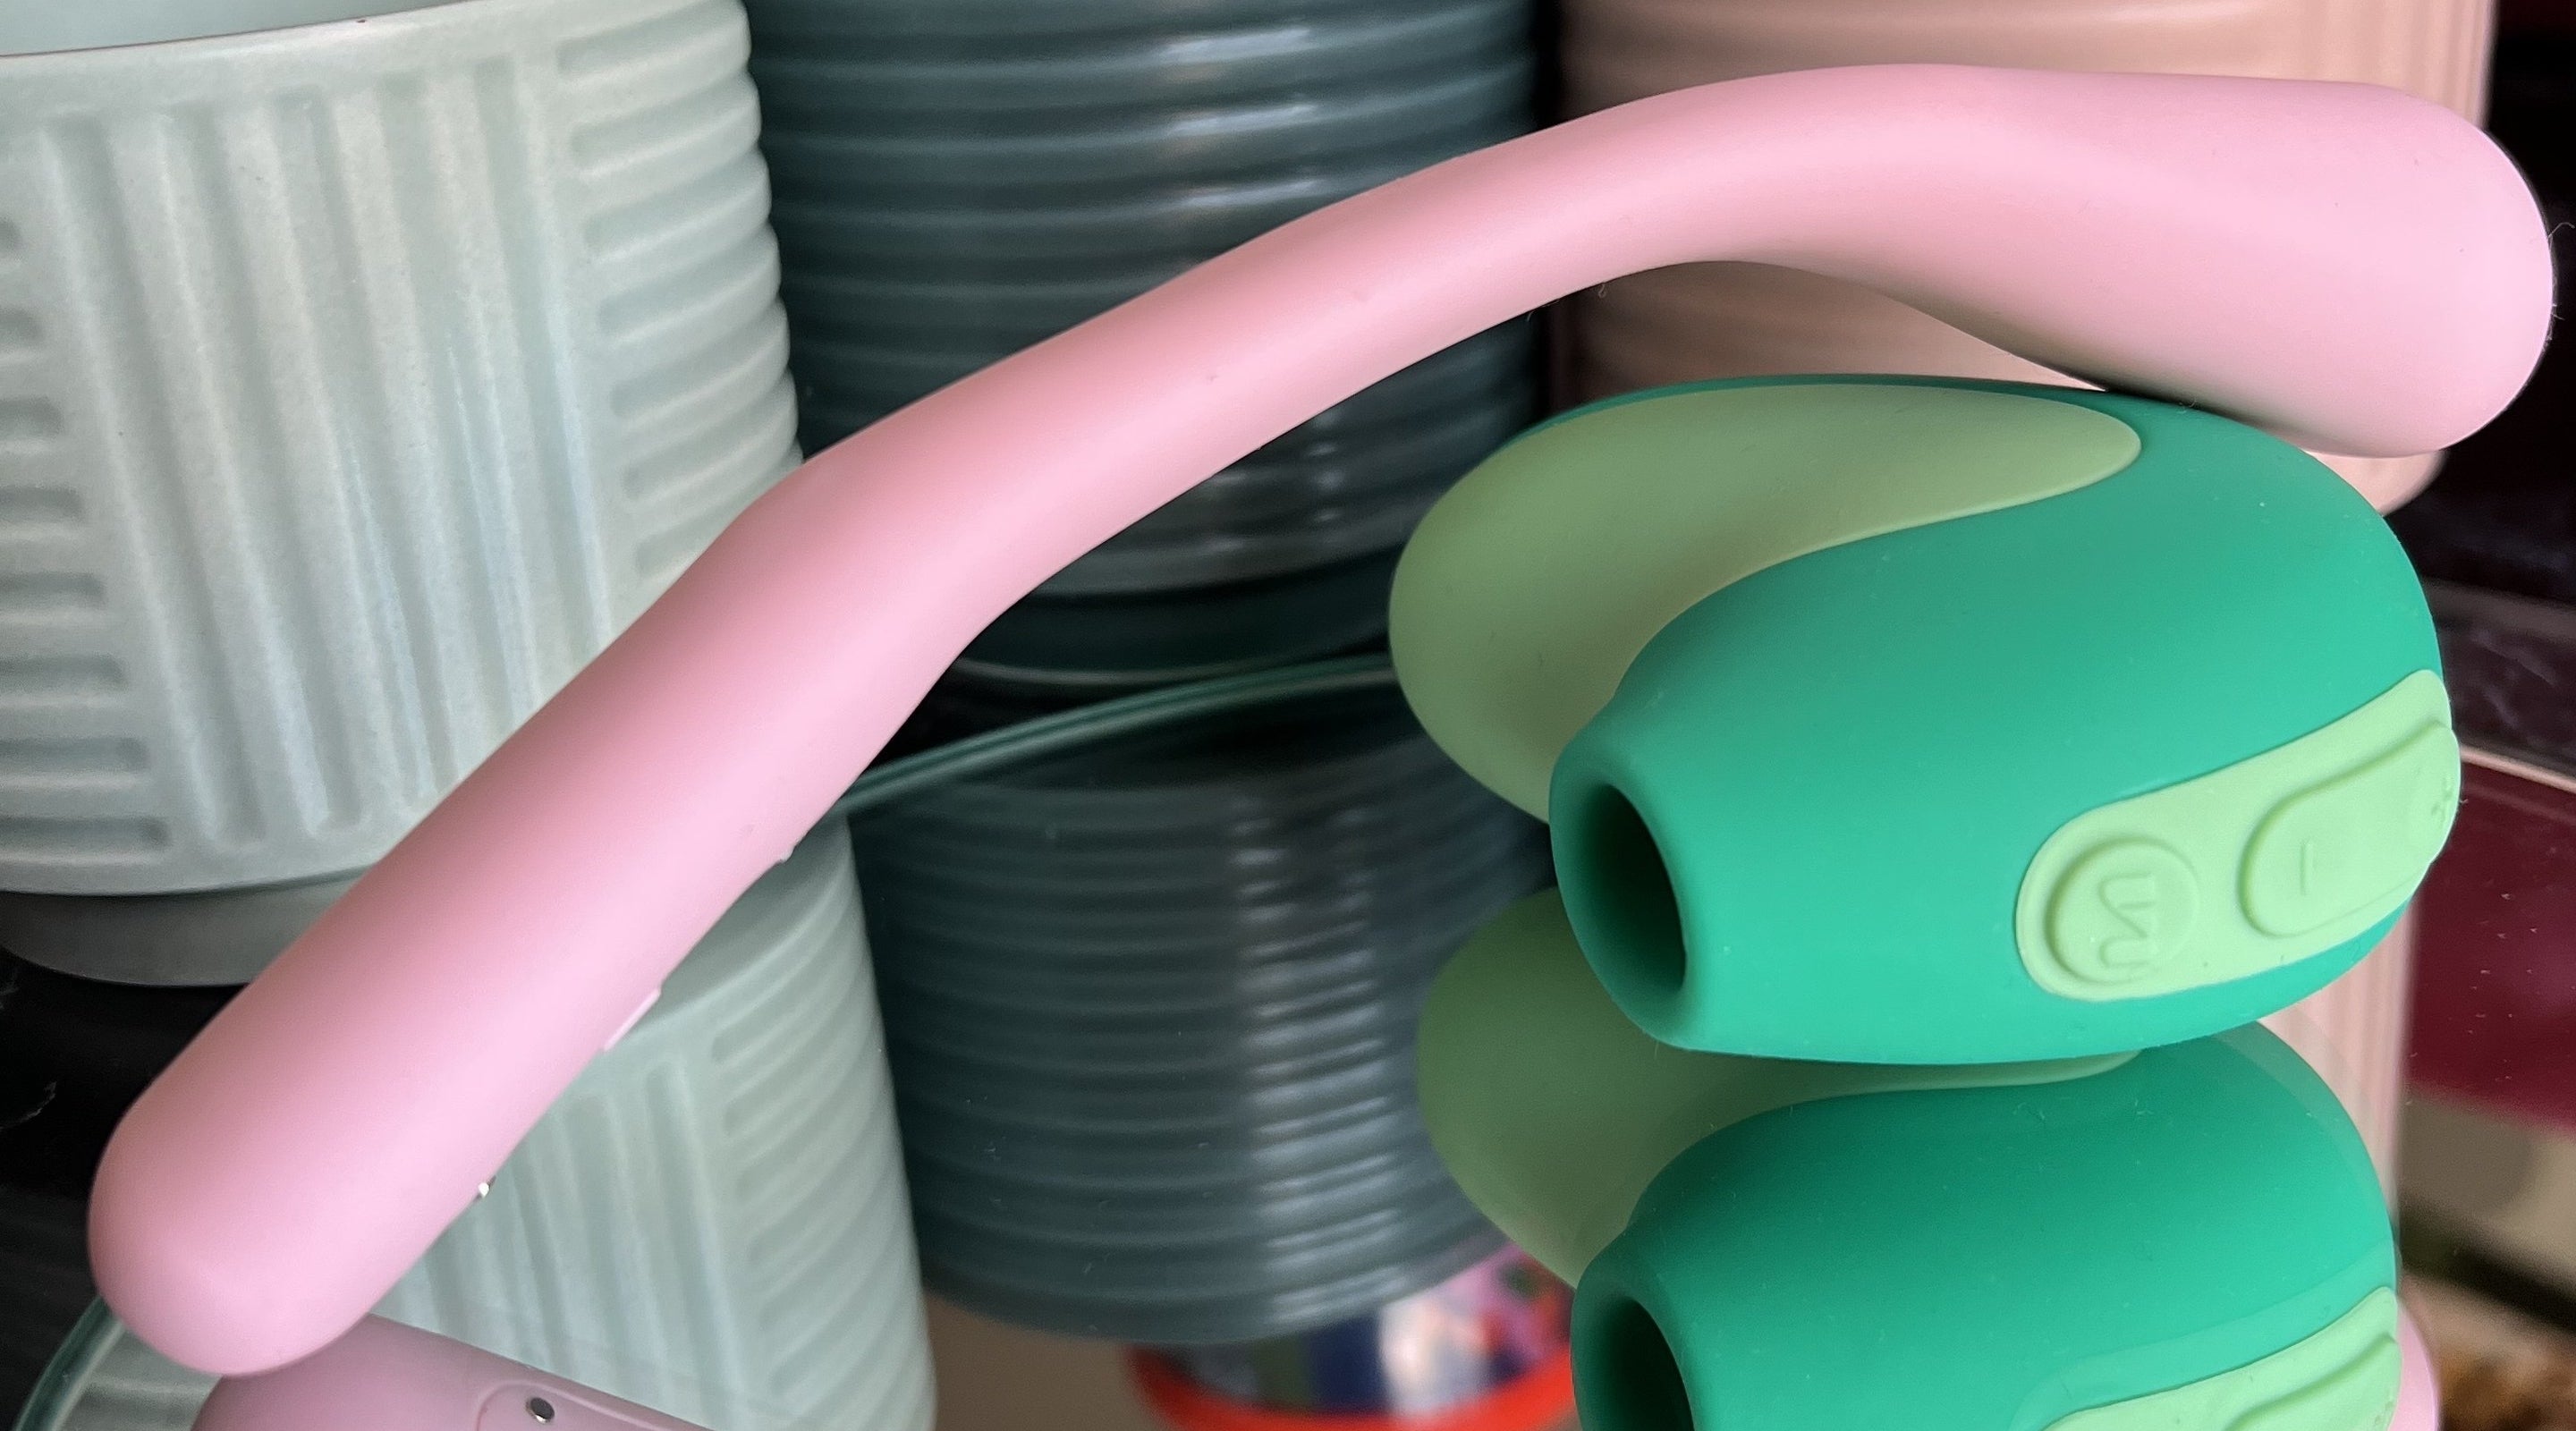 Pink flexible vibrator on green suction vibrator